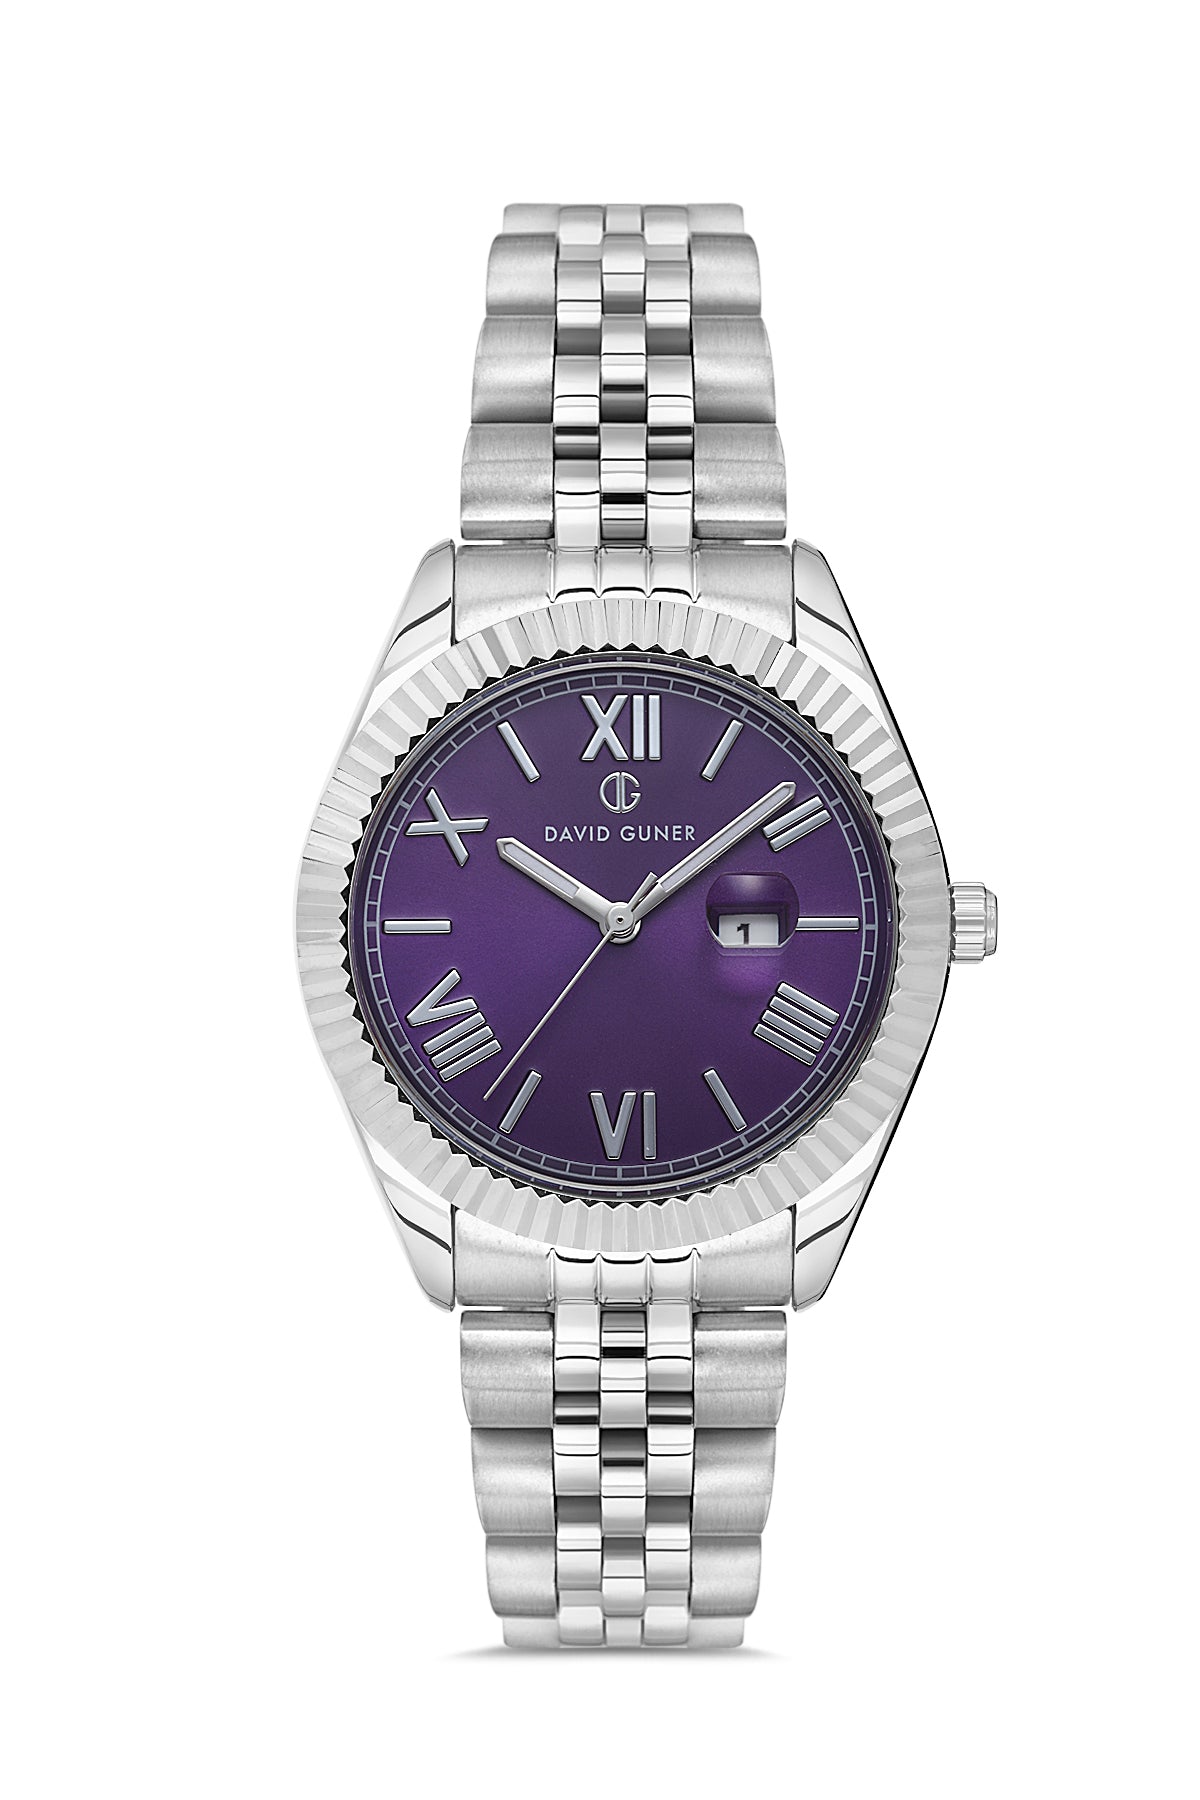 DAVID GUNER Purple Dial Women's Wristwatch